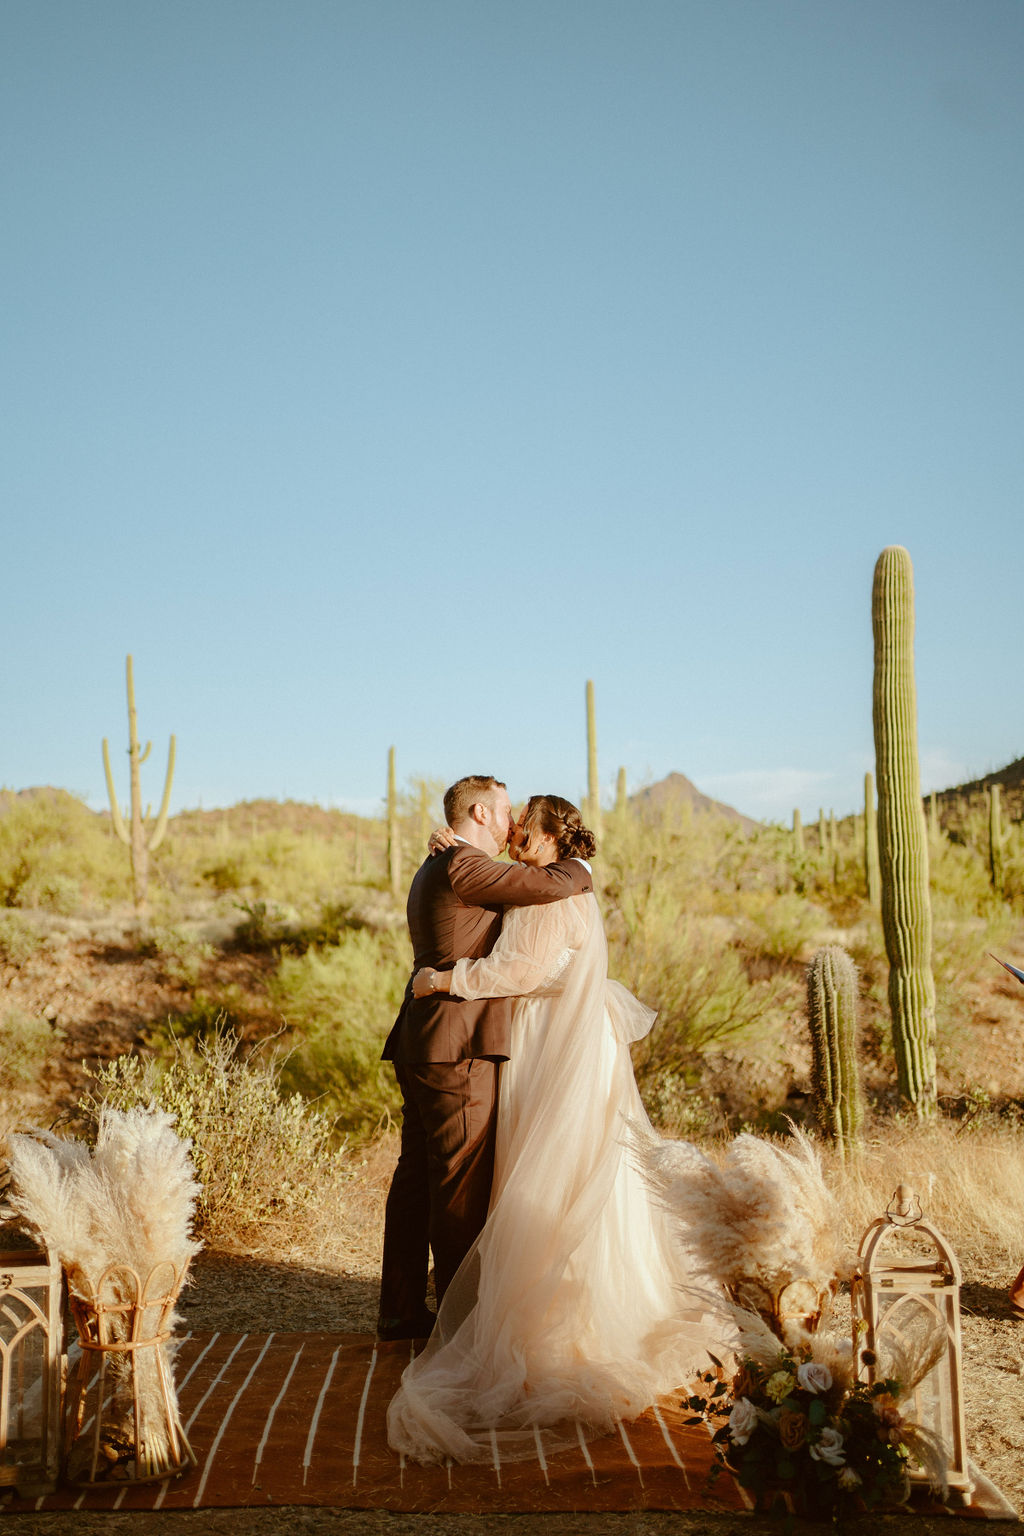 Saguaro National Park Micro-Wedding. The first kiss as Mr. & Mrs.